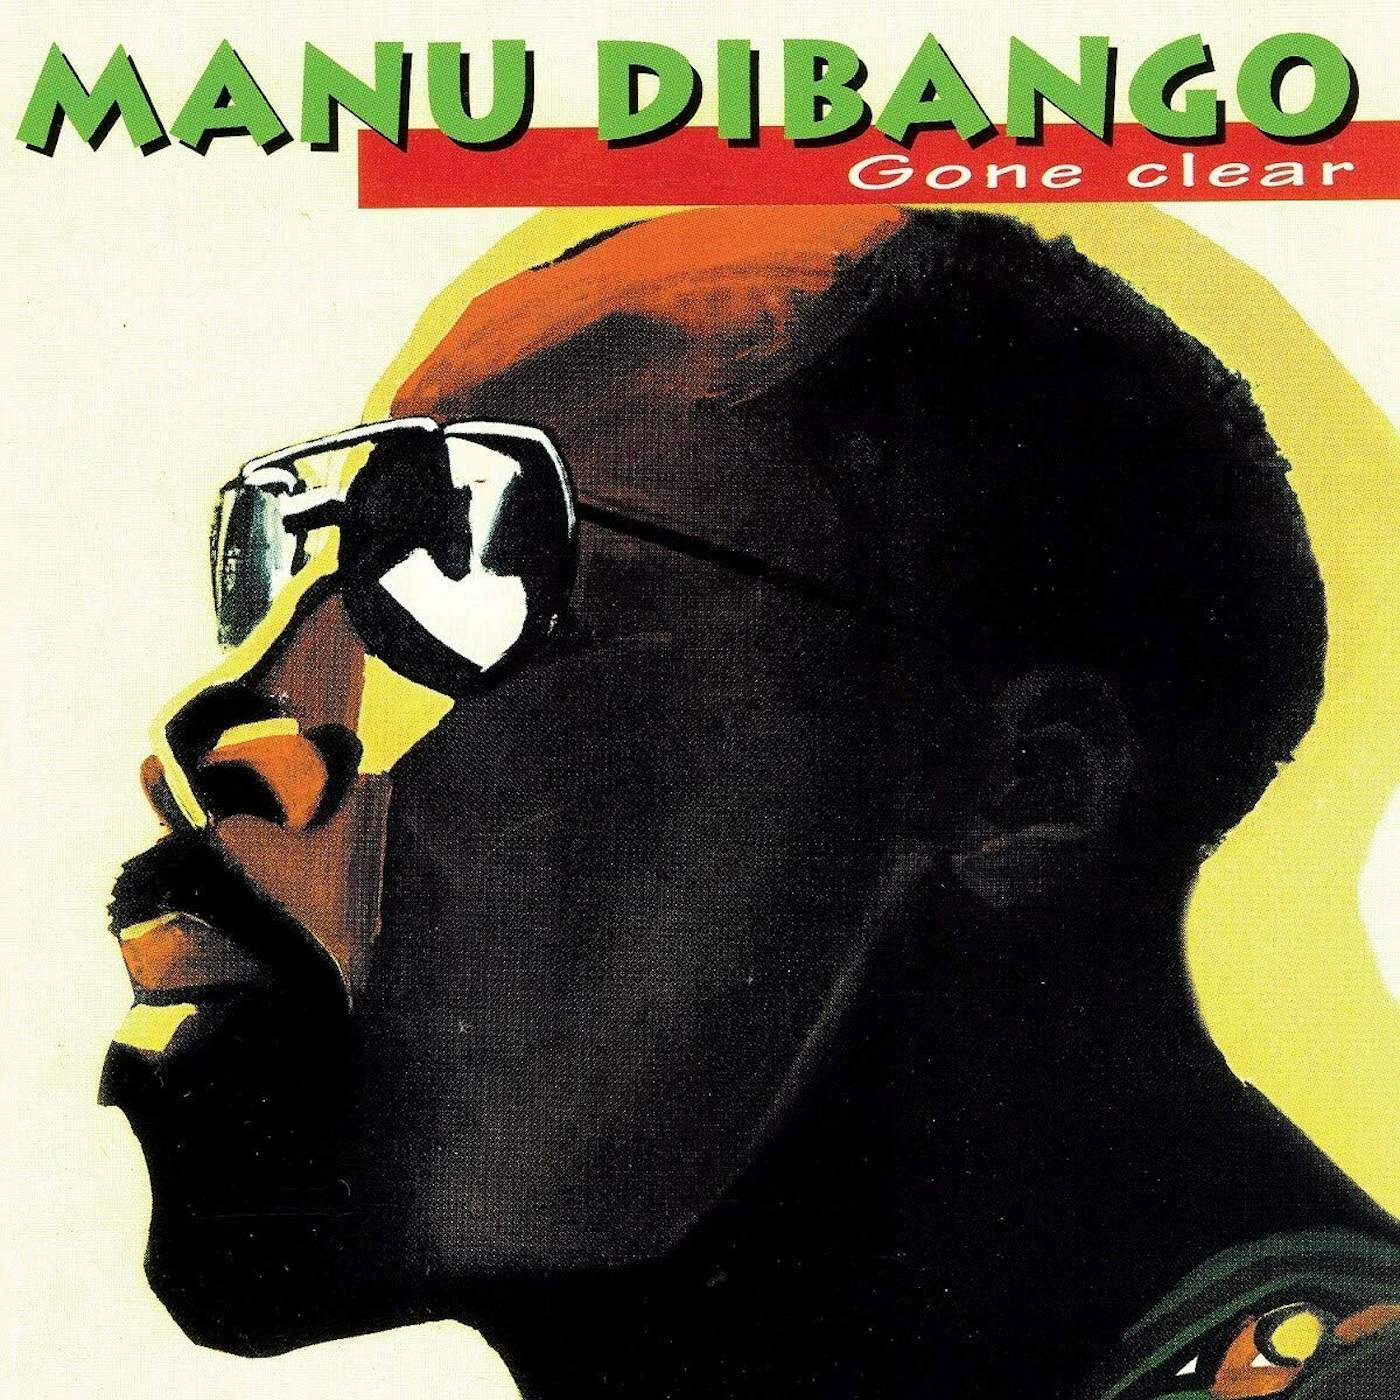 Manu Dibango Gone Clear Vinyl Record